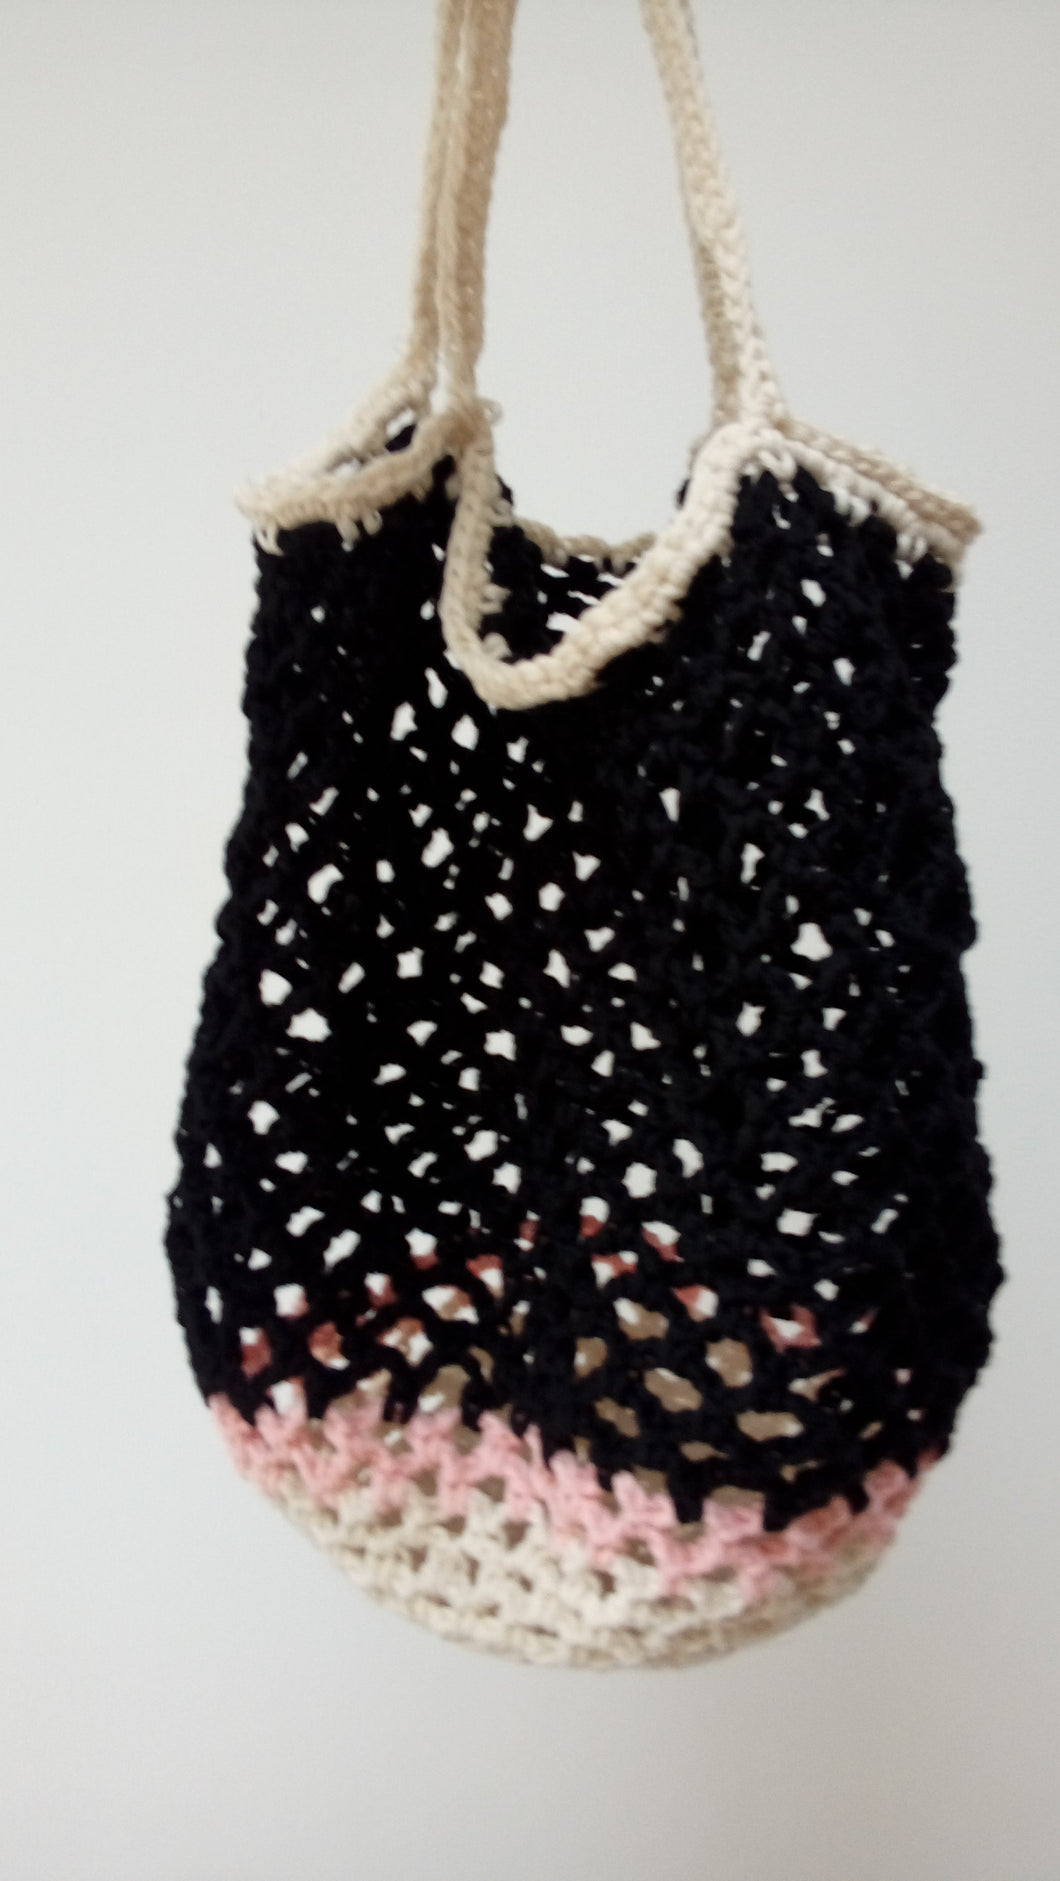 Filet market bag. Hand crocheted cotton shopper. Colour block food carrier bag for fruit and veg One Creative Cat